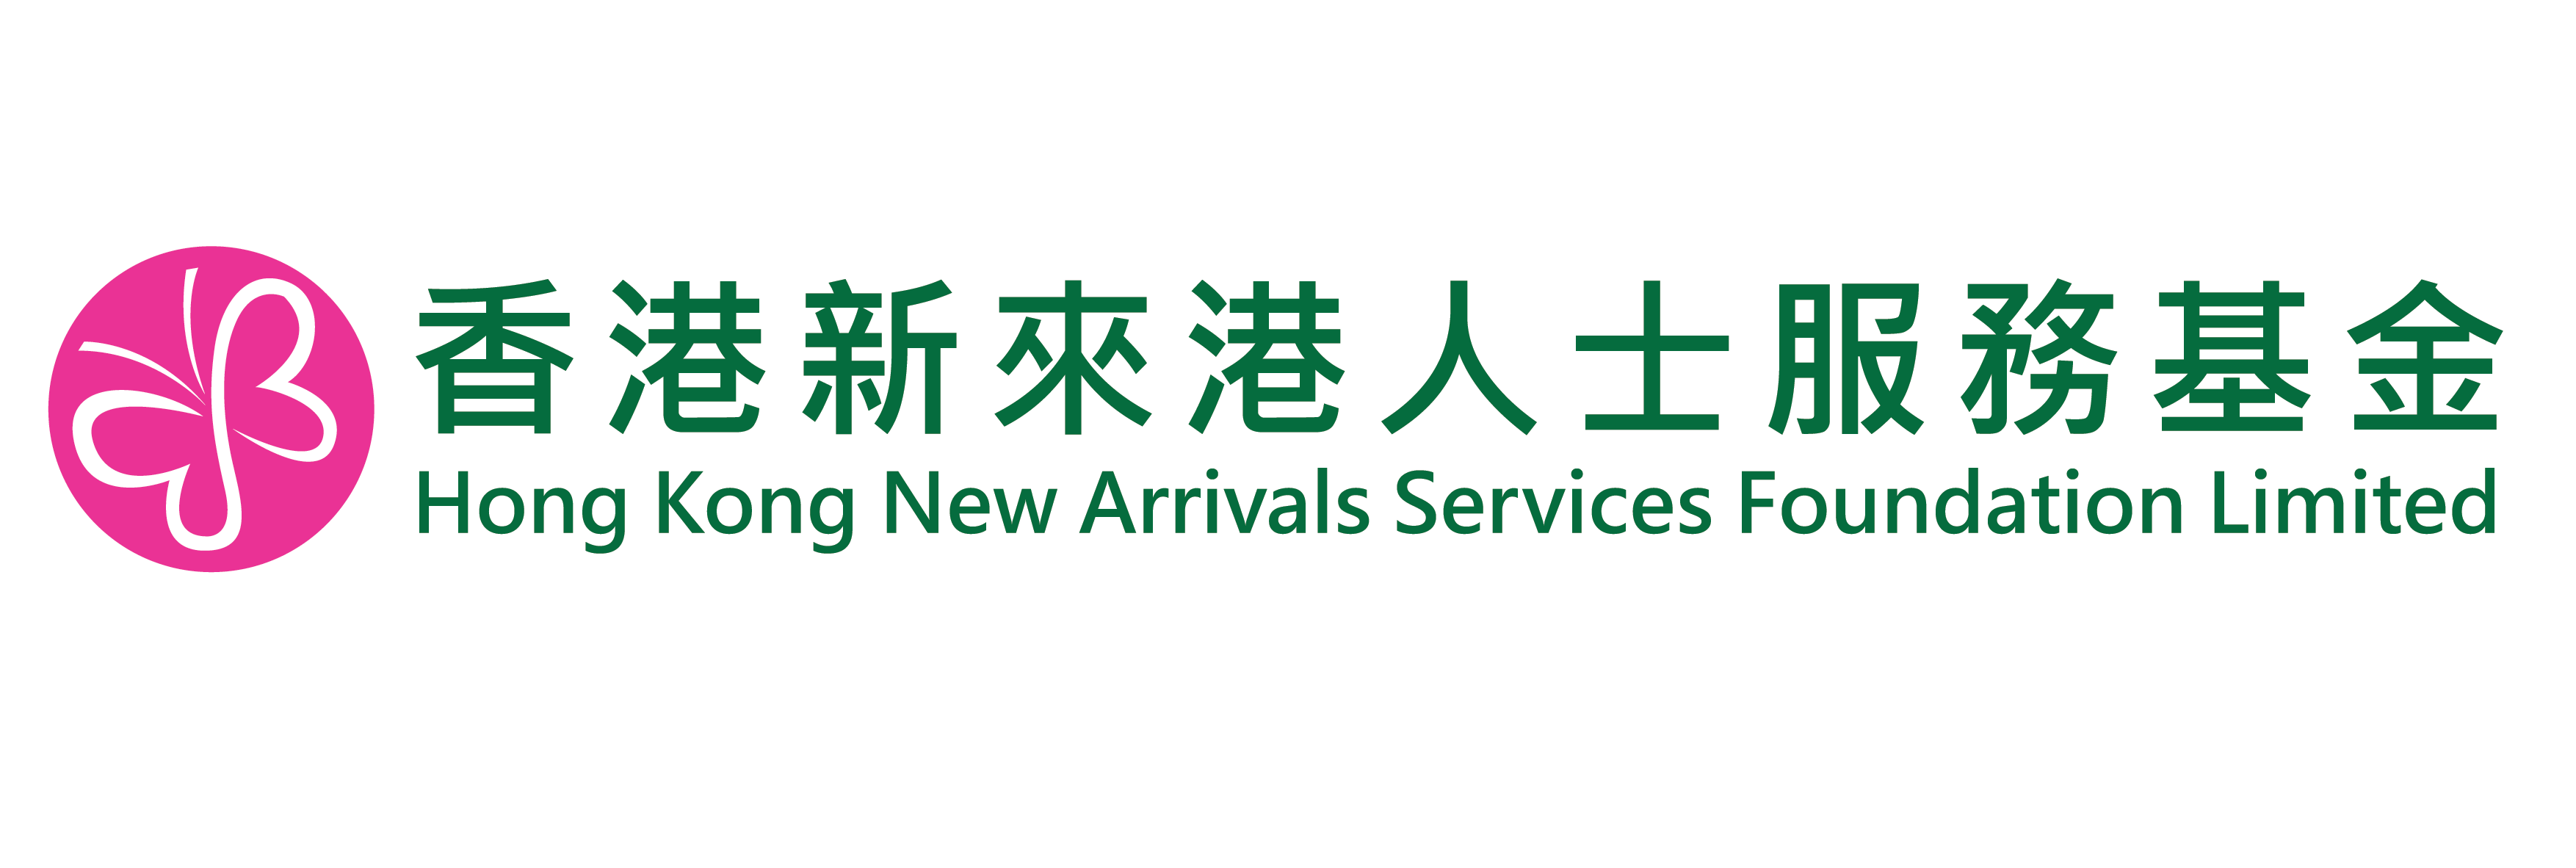 Hong Kong New Arrivals Services Foundation  香港新來港人士服務基金